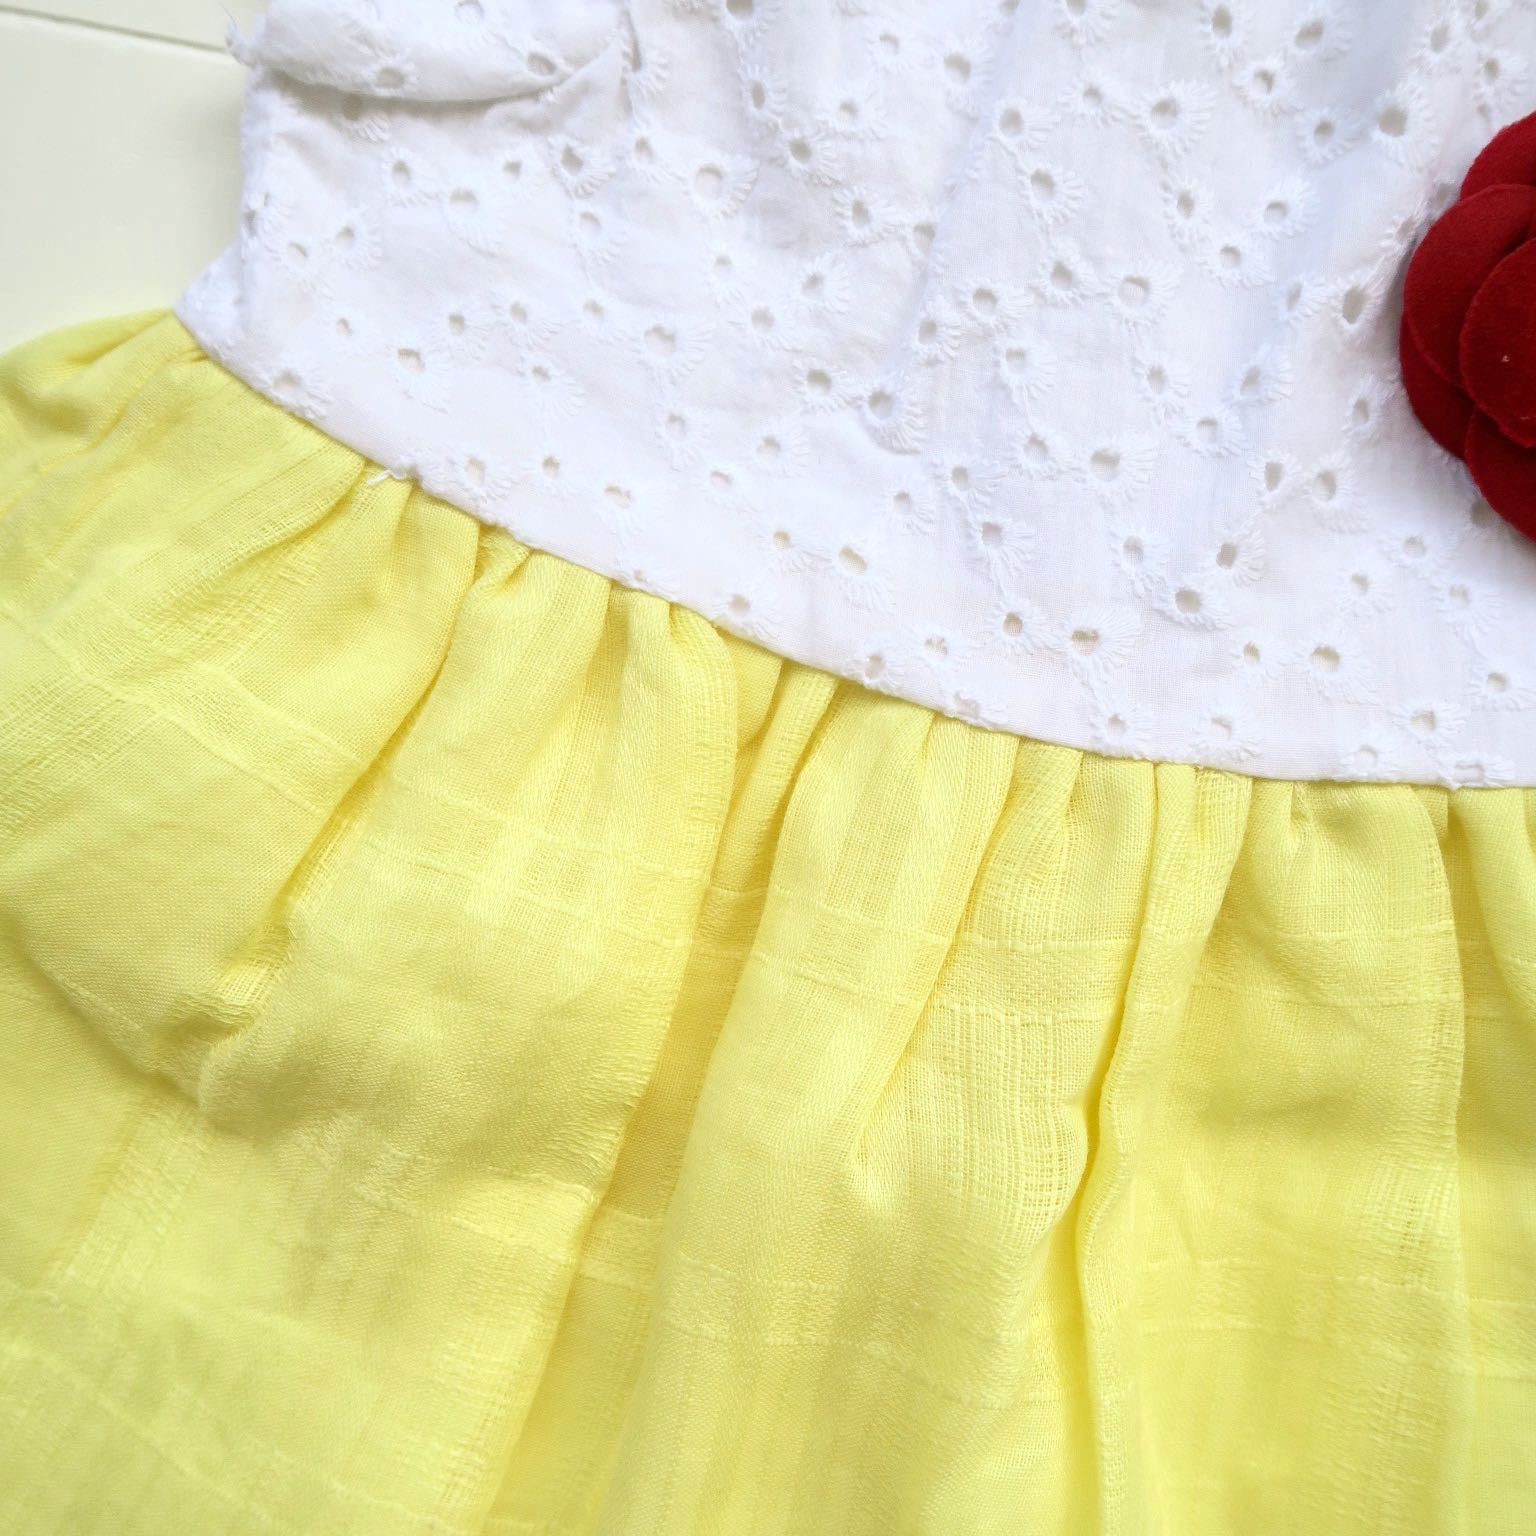 Periwinkle Dress in White Eyelet & Yellow Linen - Lil' Tati